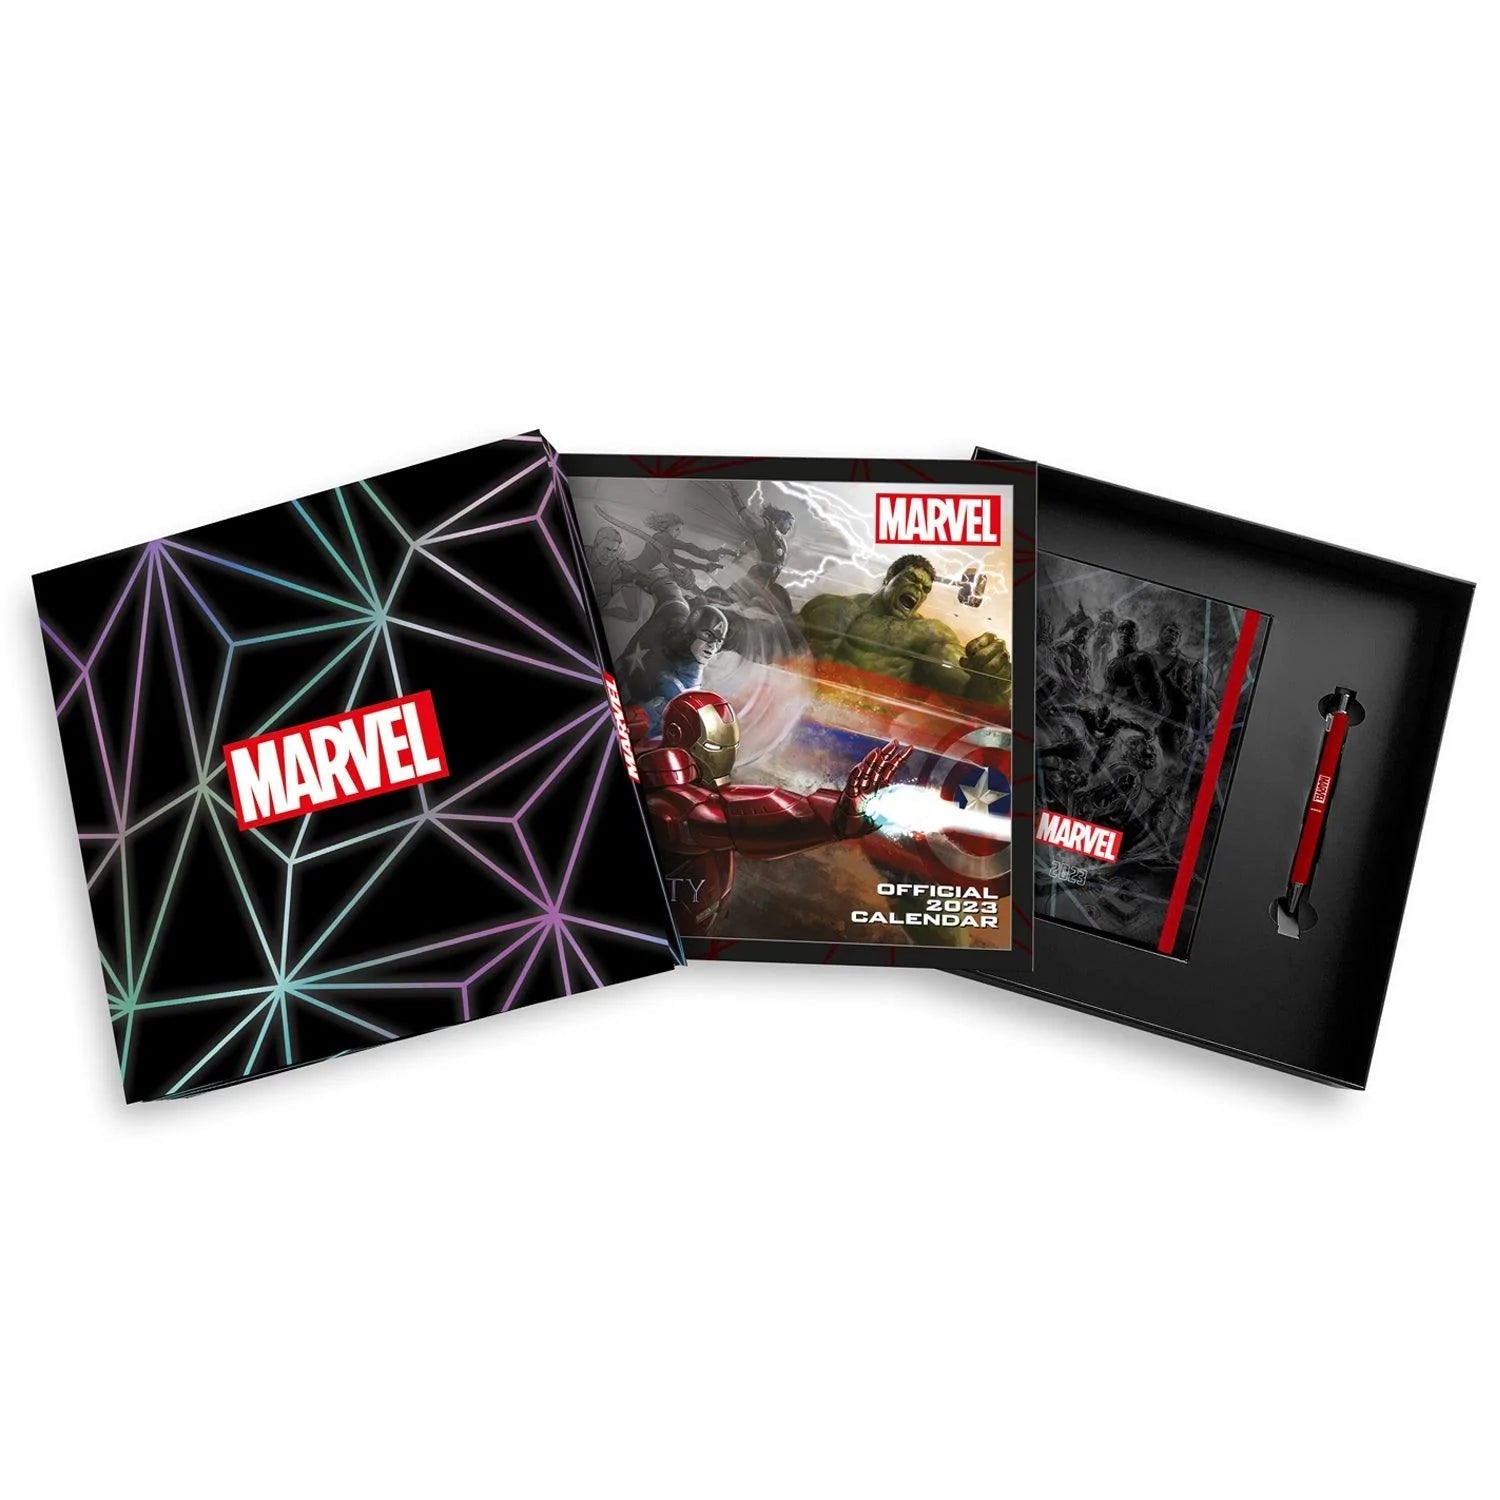 2023 Marvel - The Infinity Saga - Calendar Gift Box Calendar